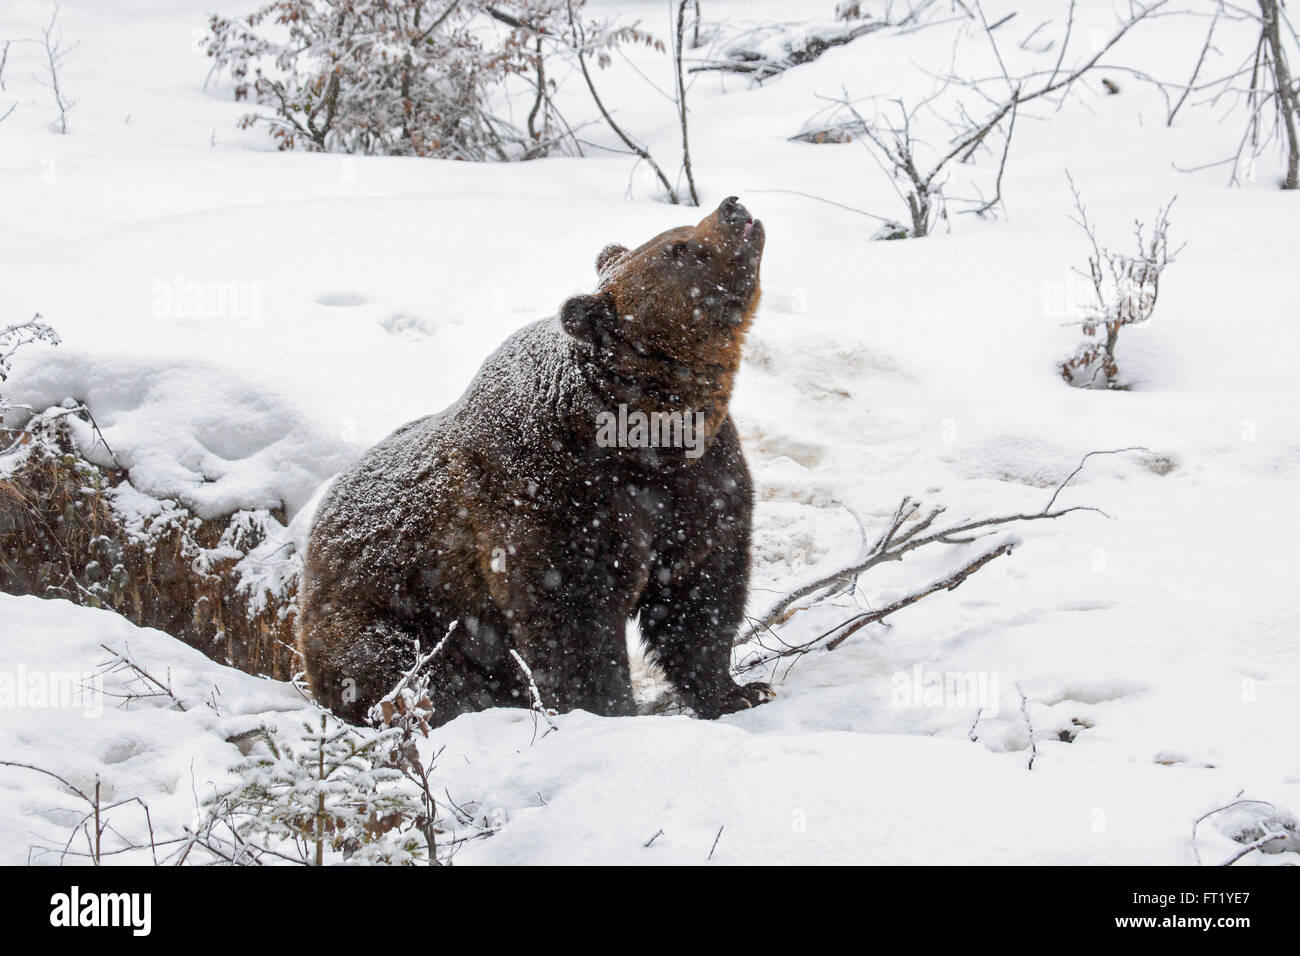 Brown bear (Ursus arctos) leaving den during snow shower in winter / spring Stock Photo